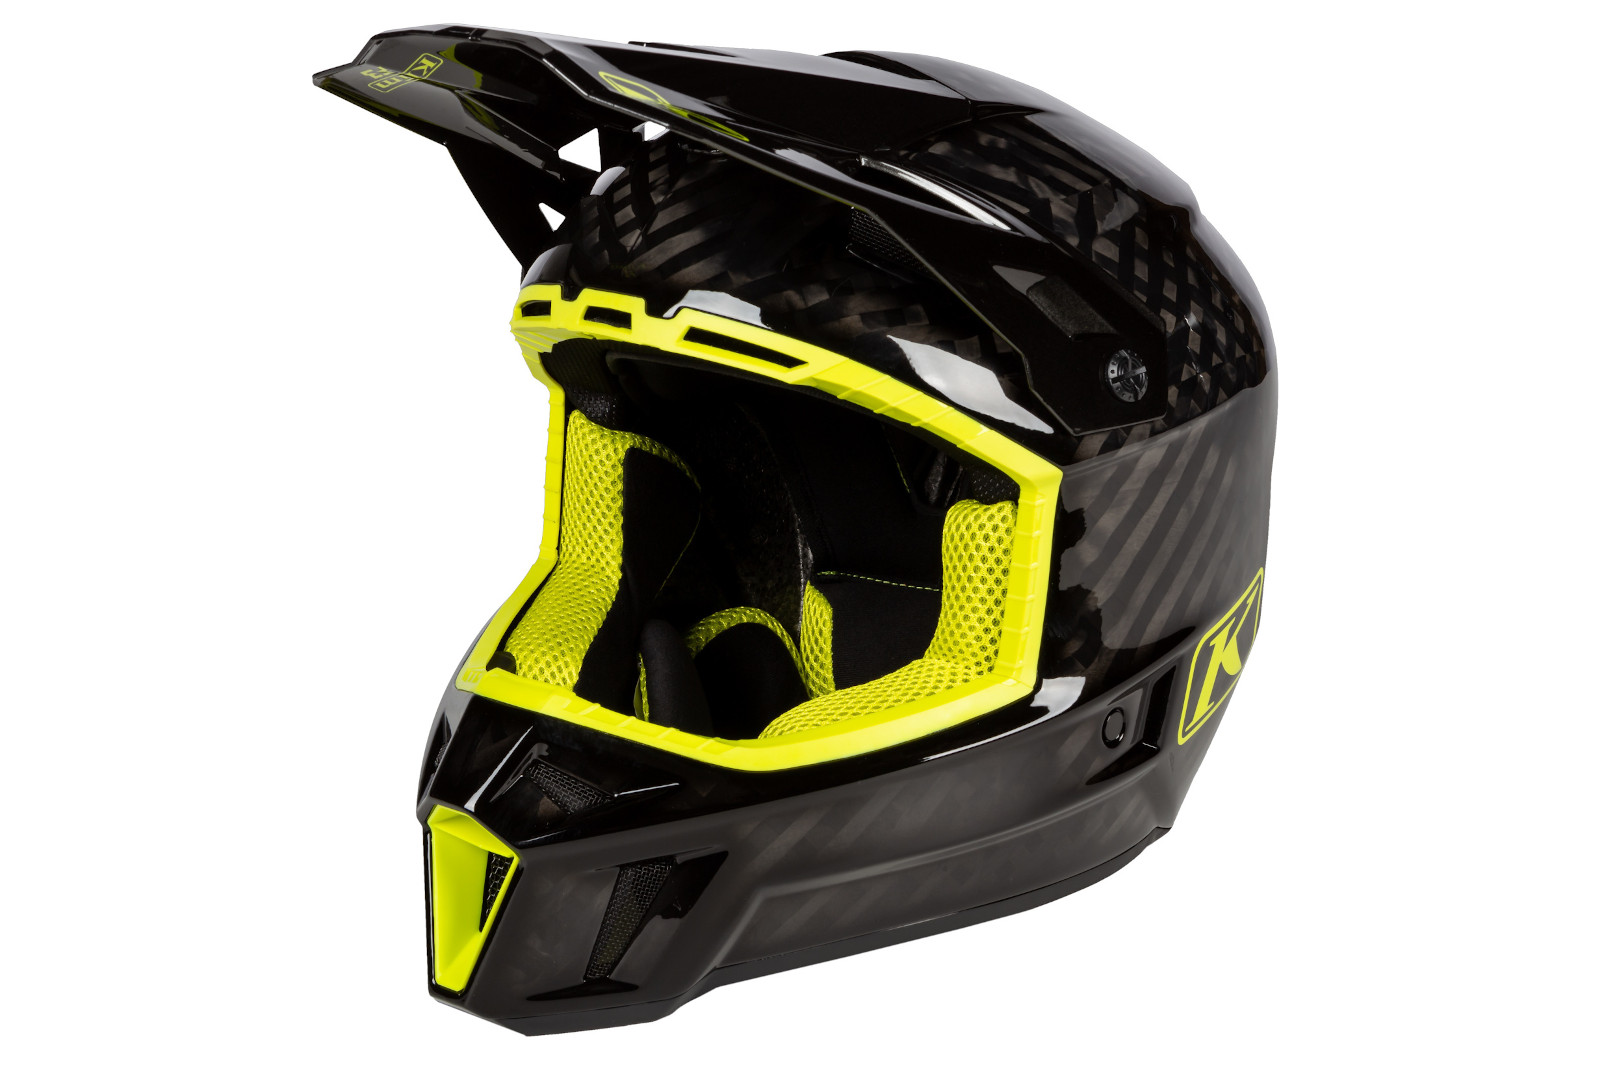 Nuevo casco F3 Carbon de Klim